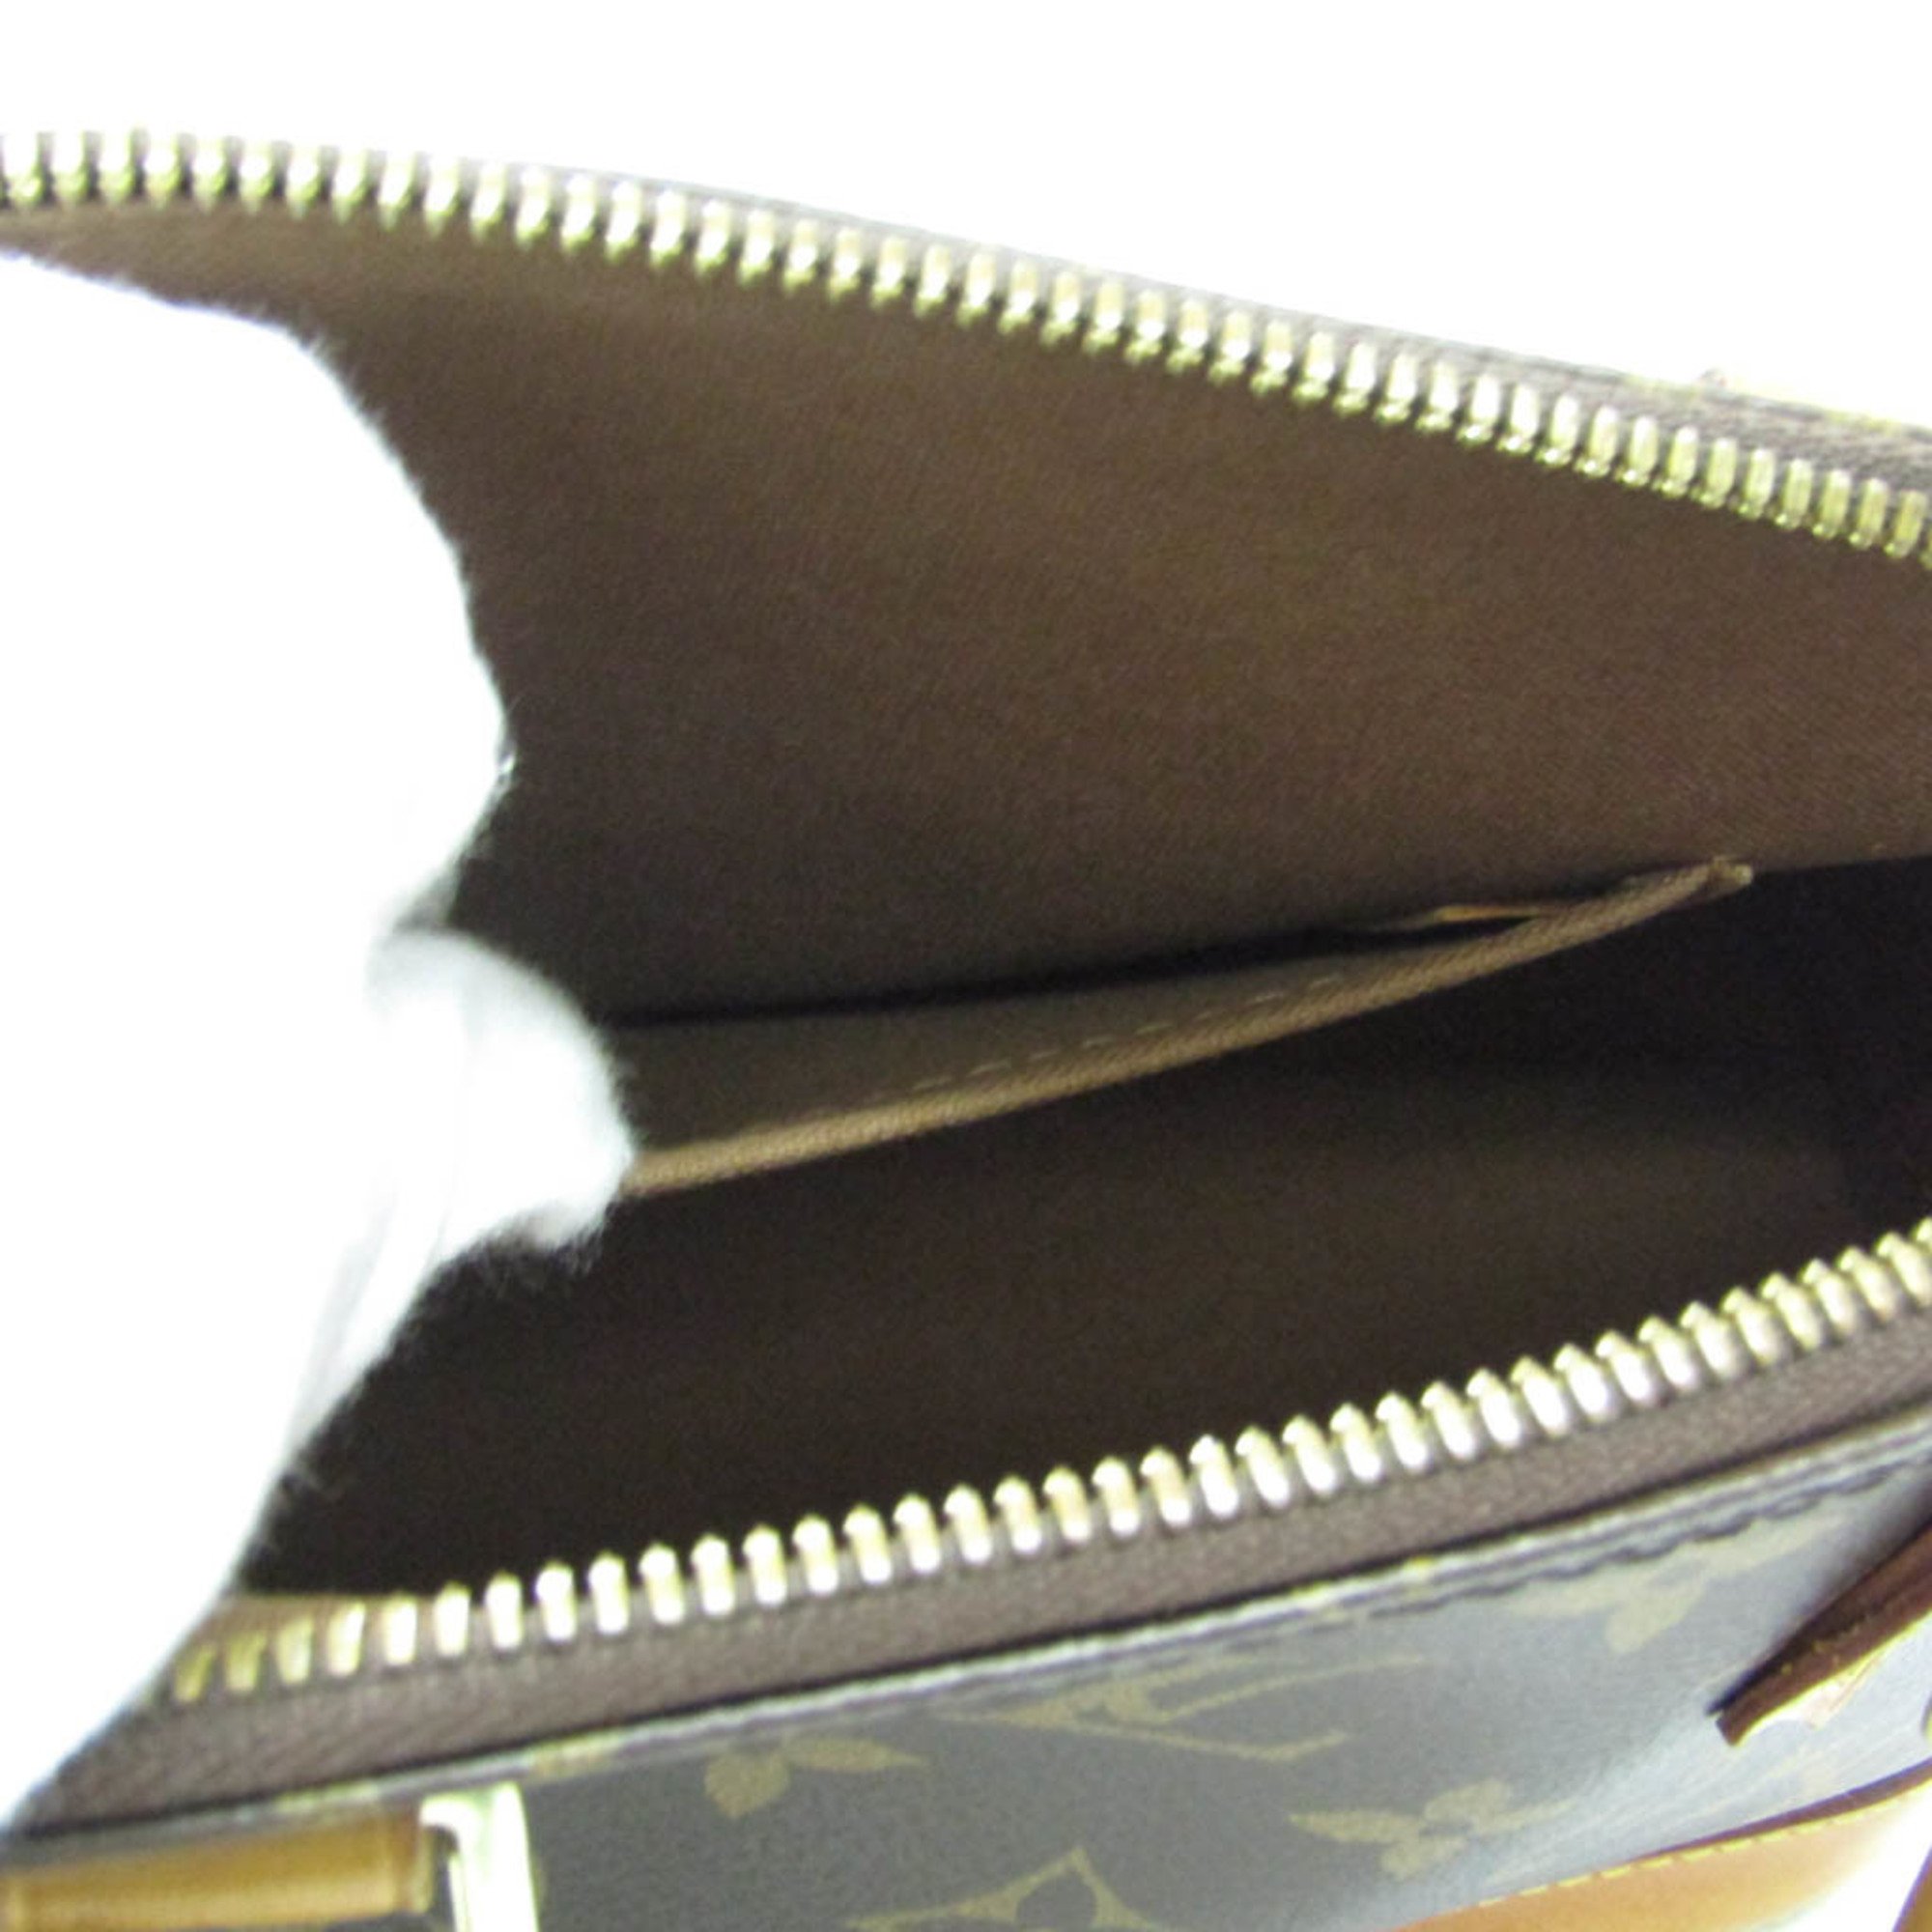 Louis Vuitton Monogram Alma BB M53152 Women's Handbag,Shoulder Bag Monogram